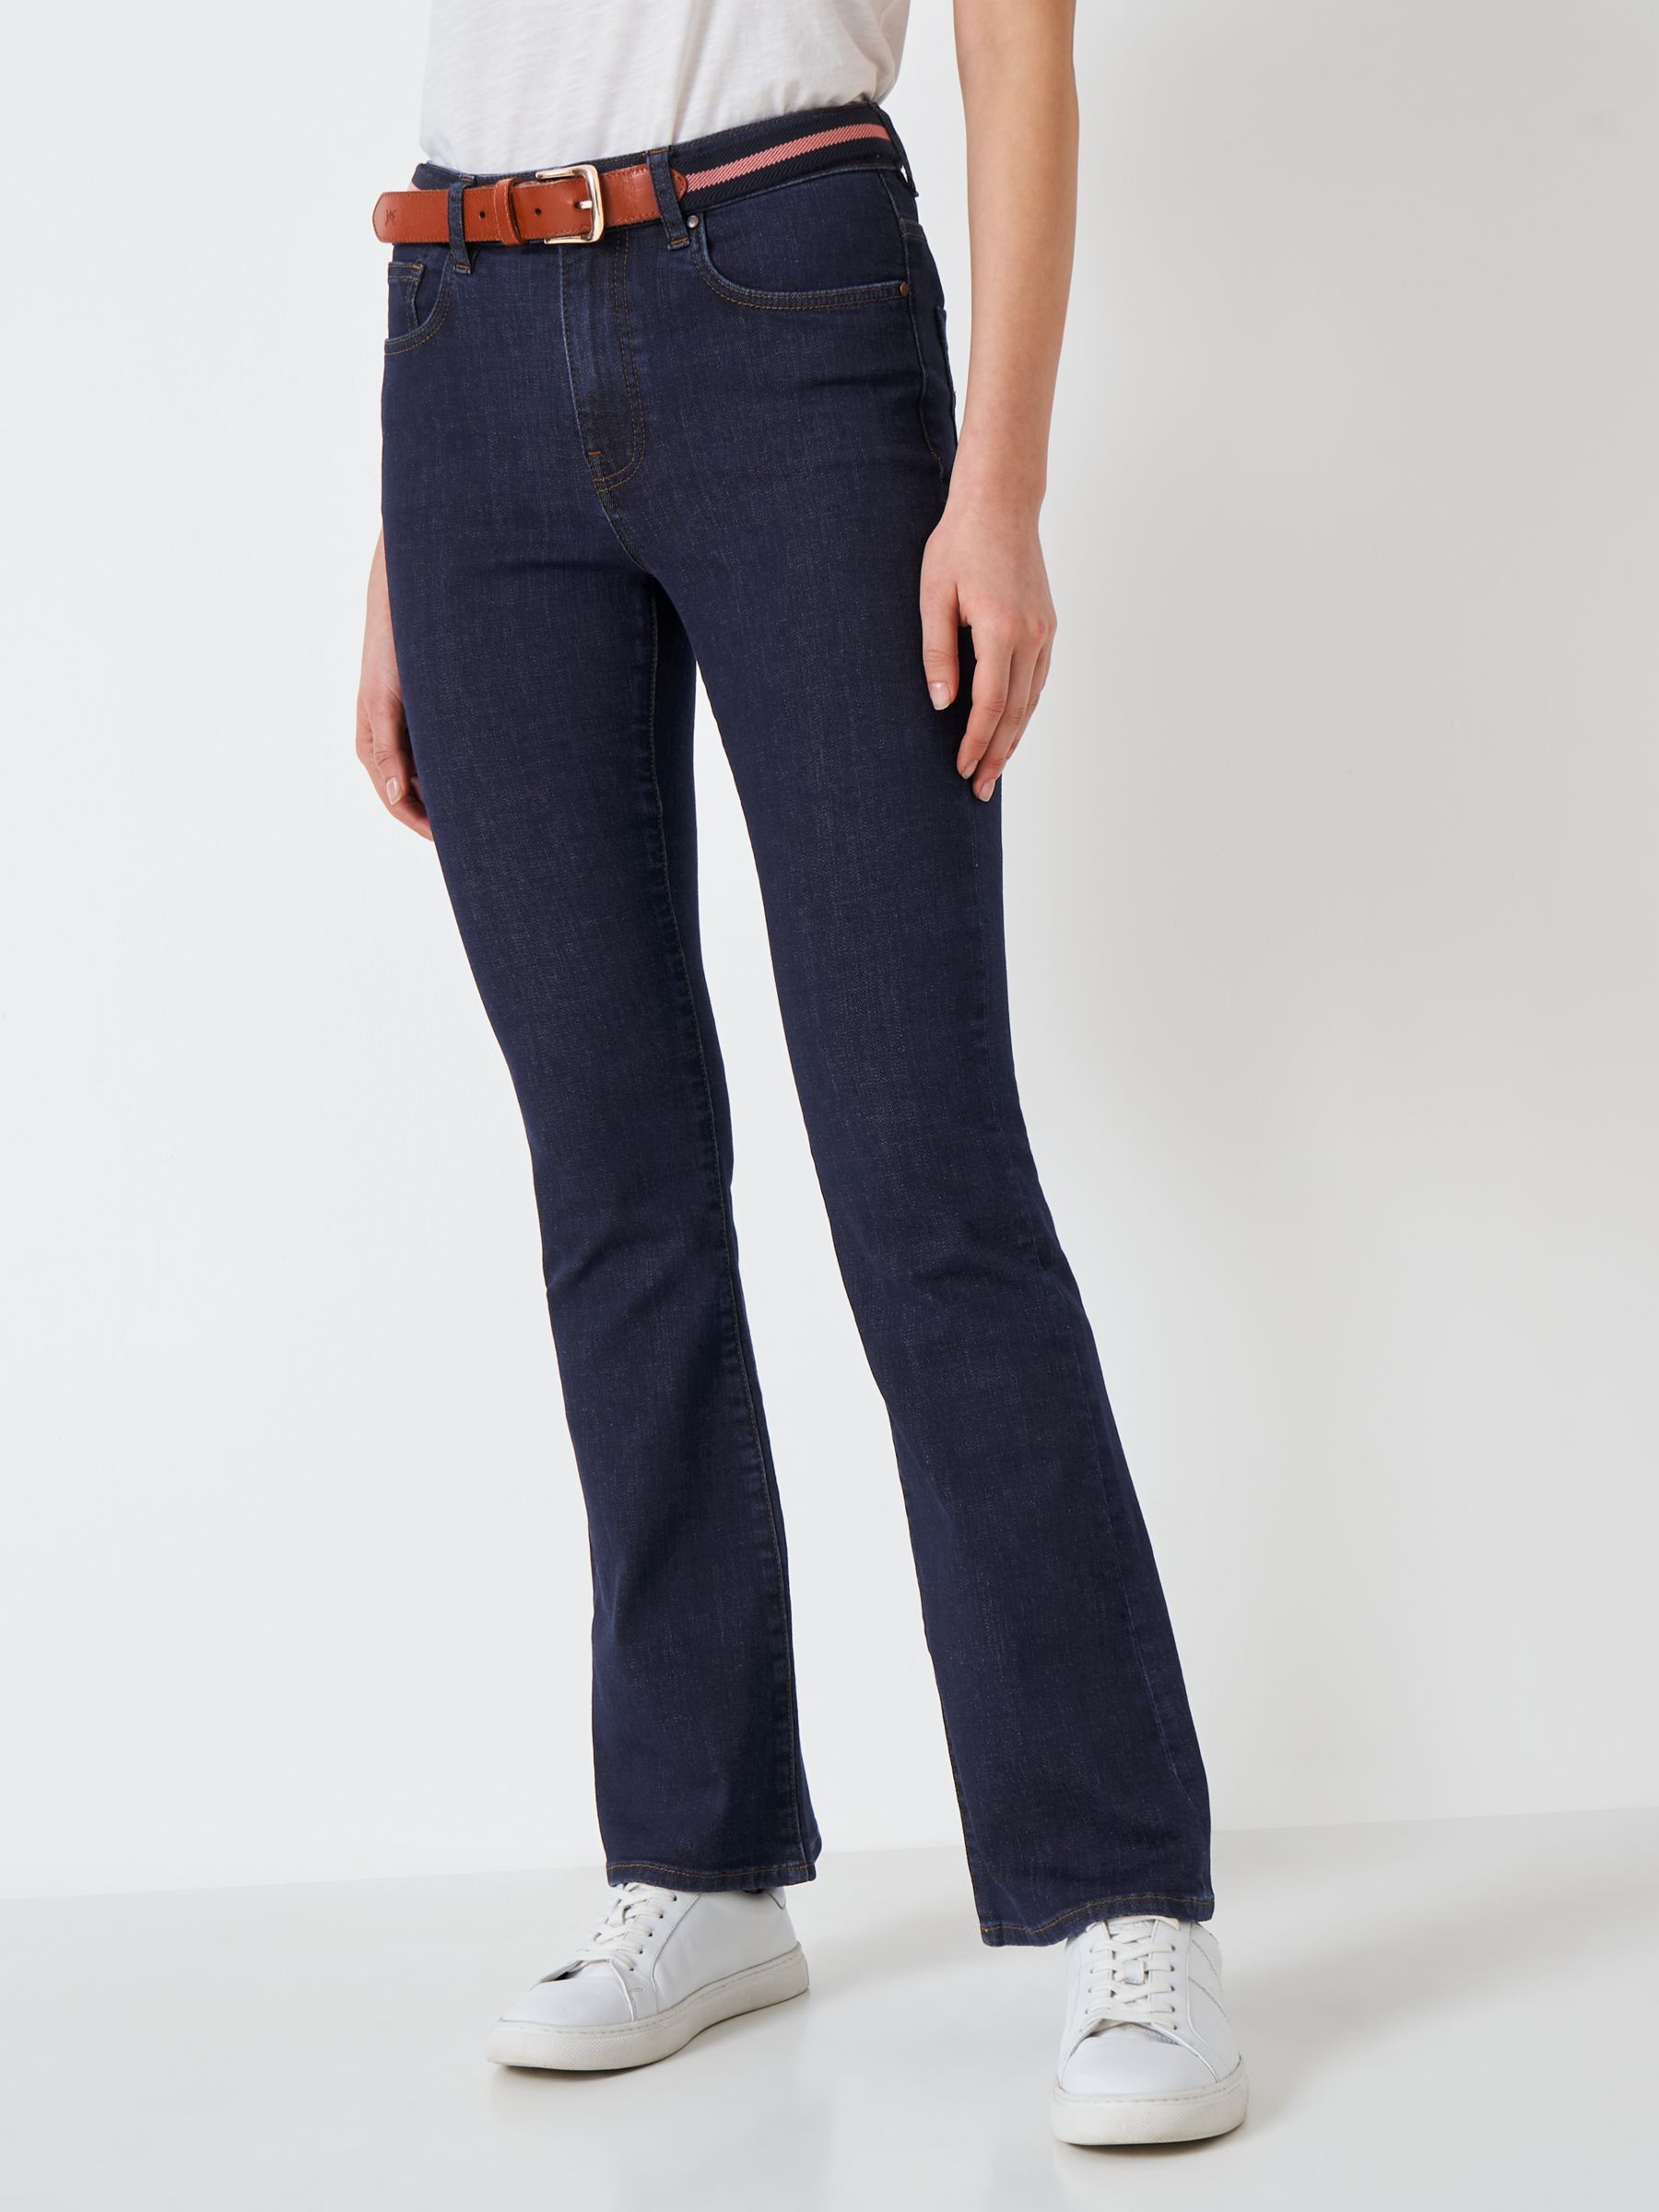 Bootcut Jeans, Women's Trousers